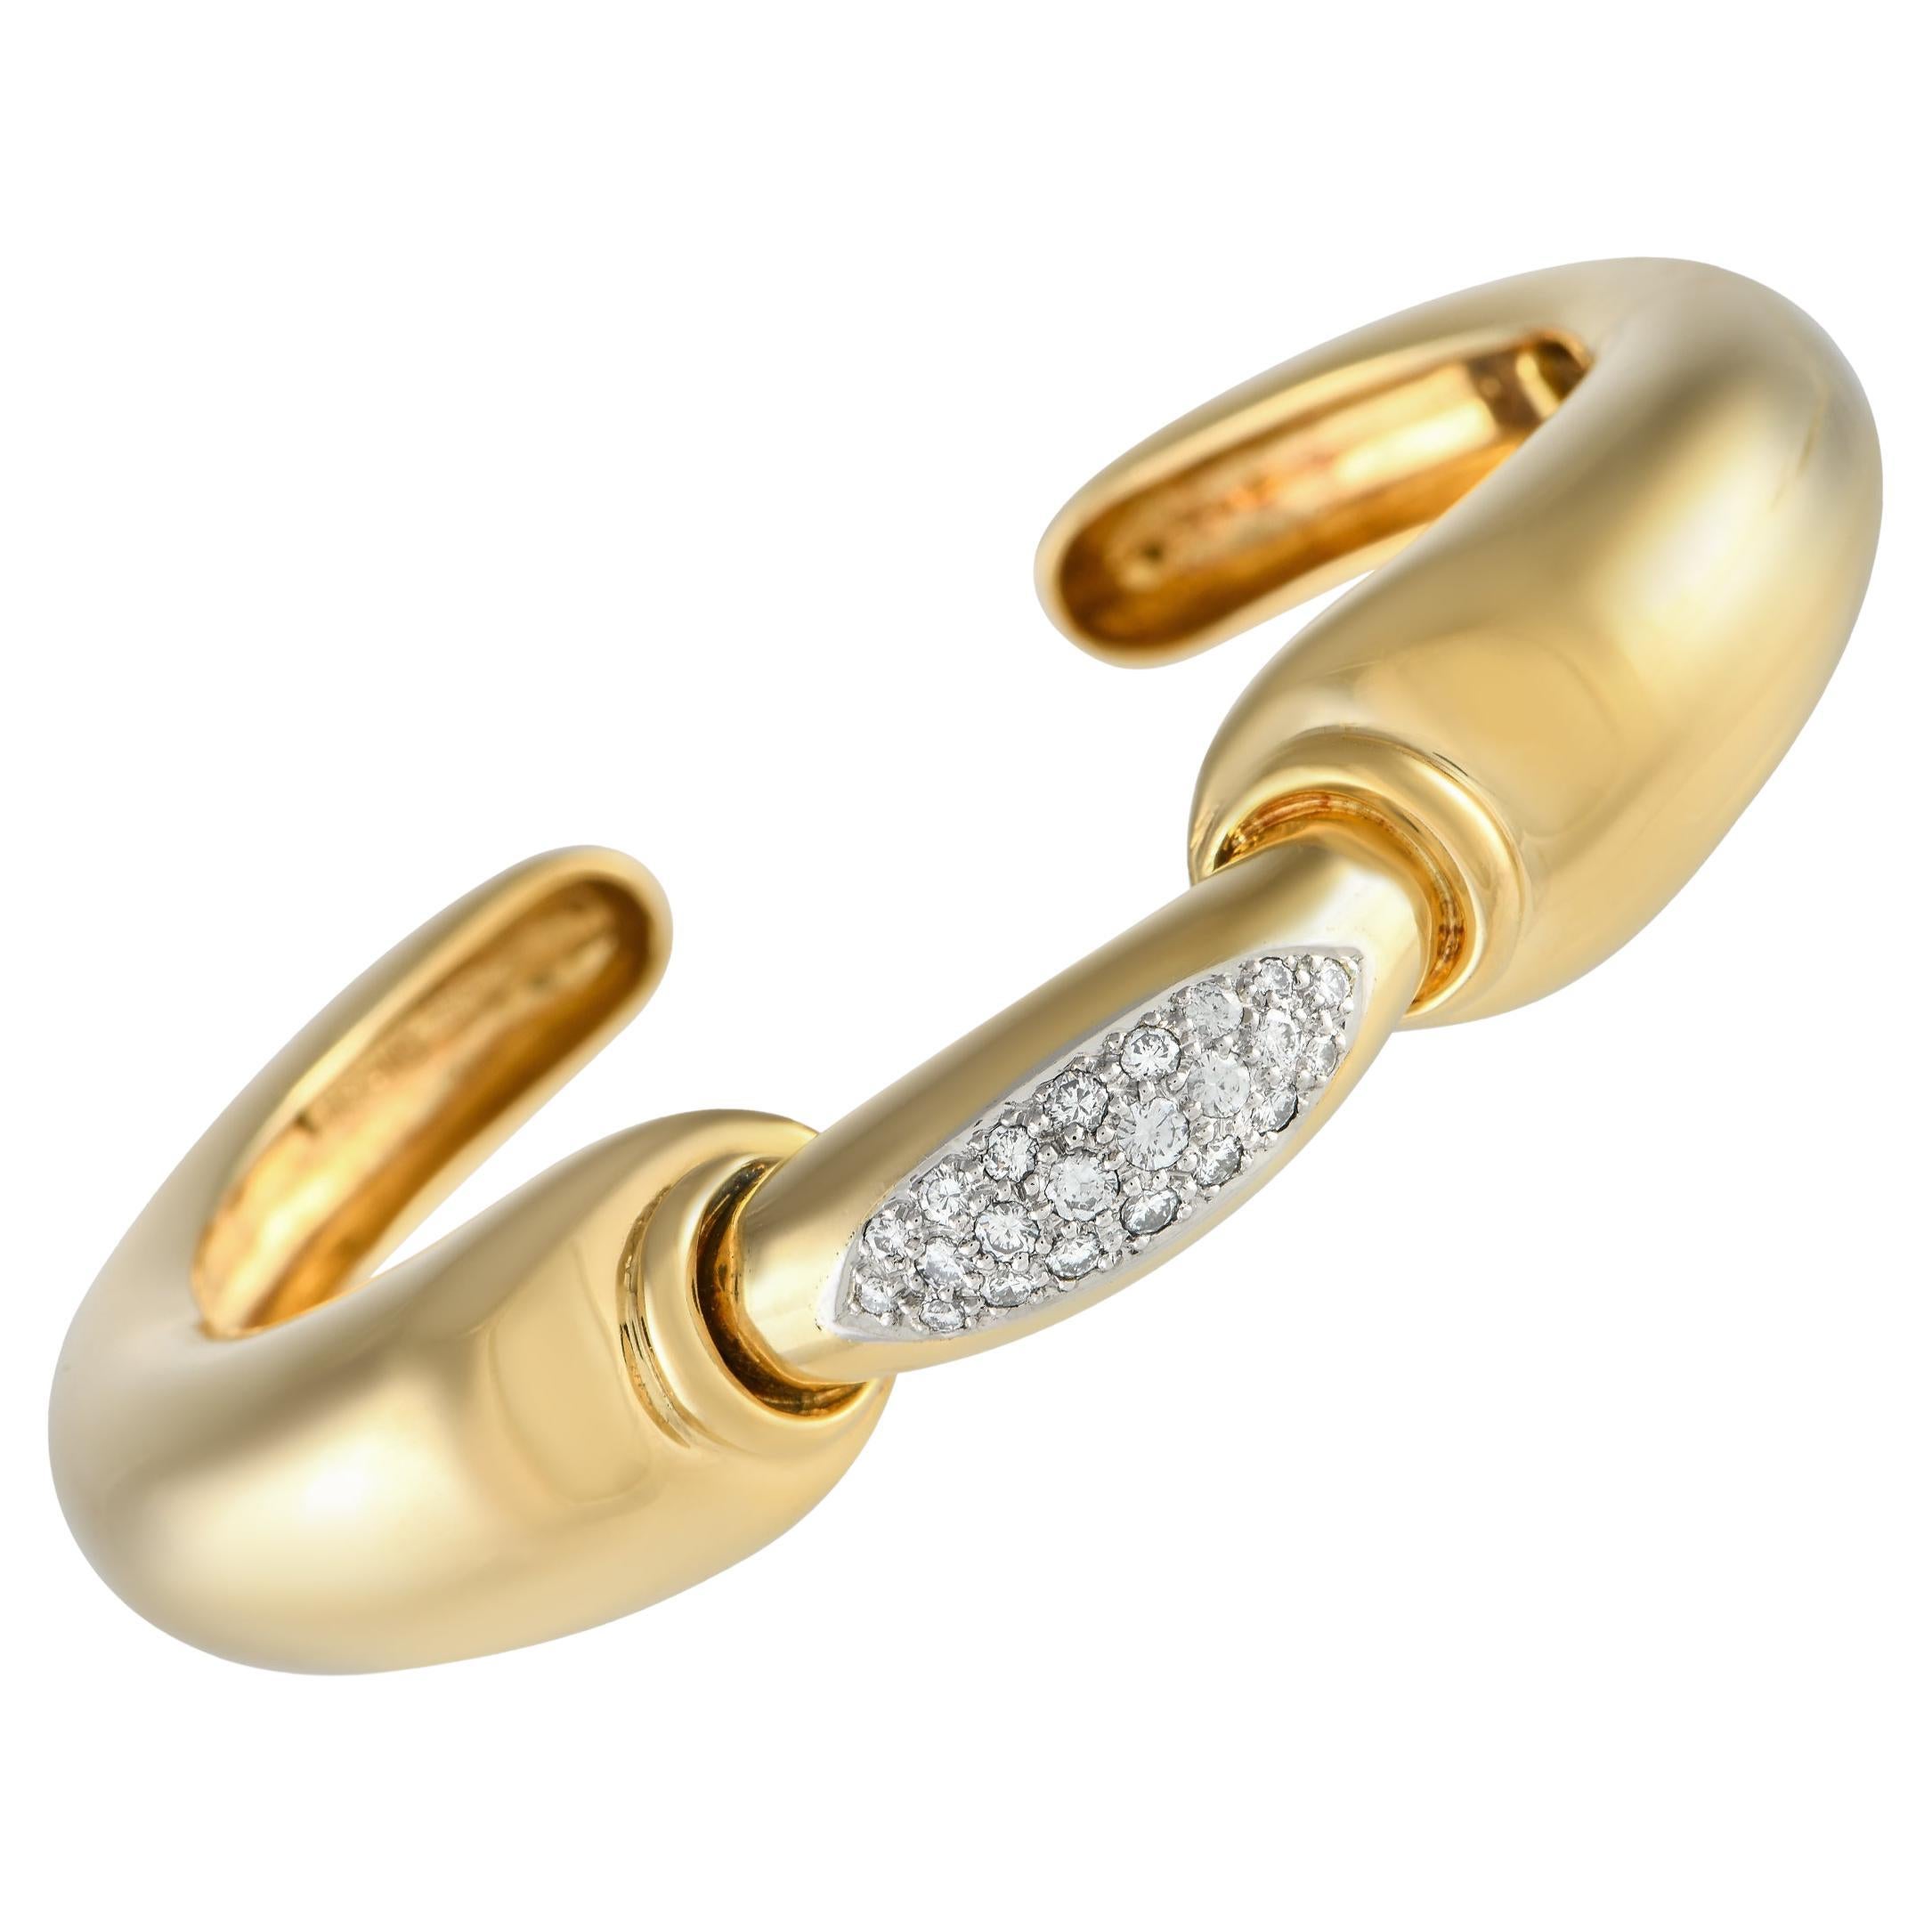 Tiffany & Co. 18k Yellow Gold 0.55 Carat Diamond Cuff Bracelet